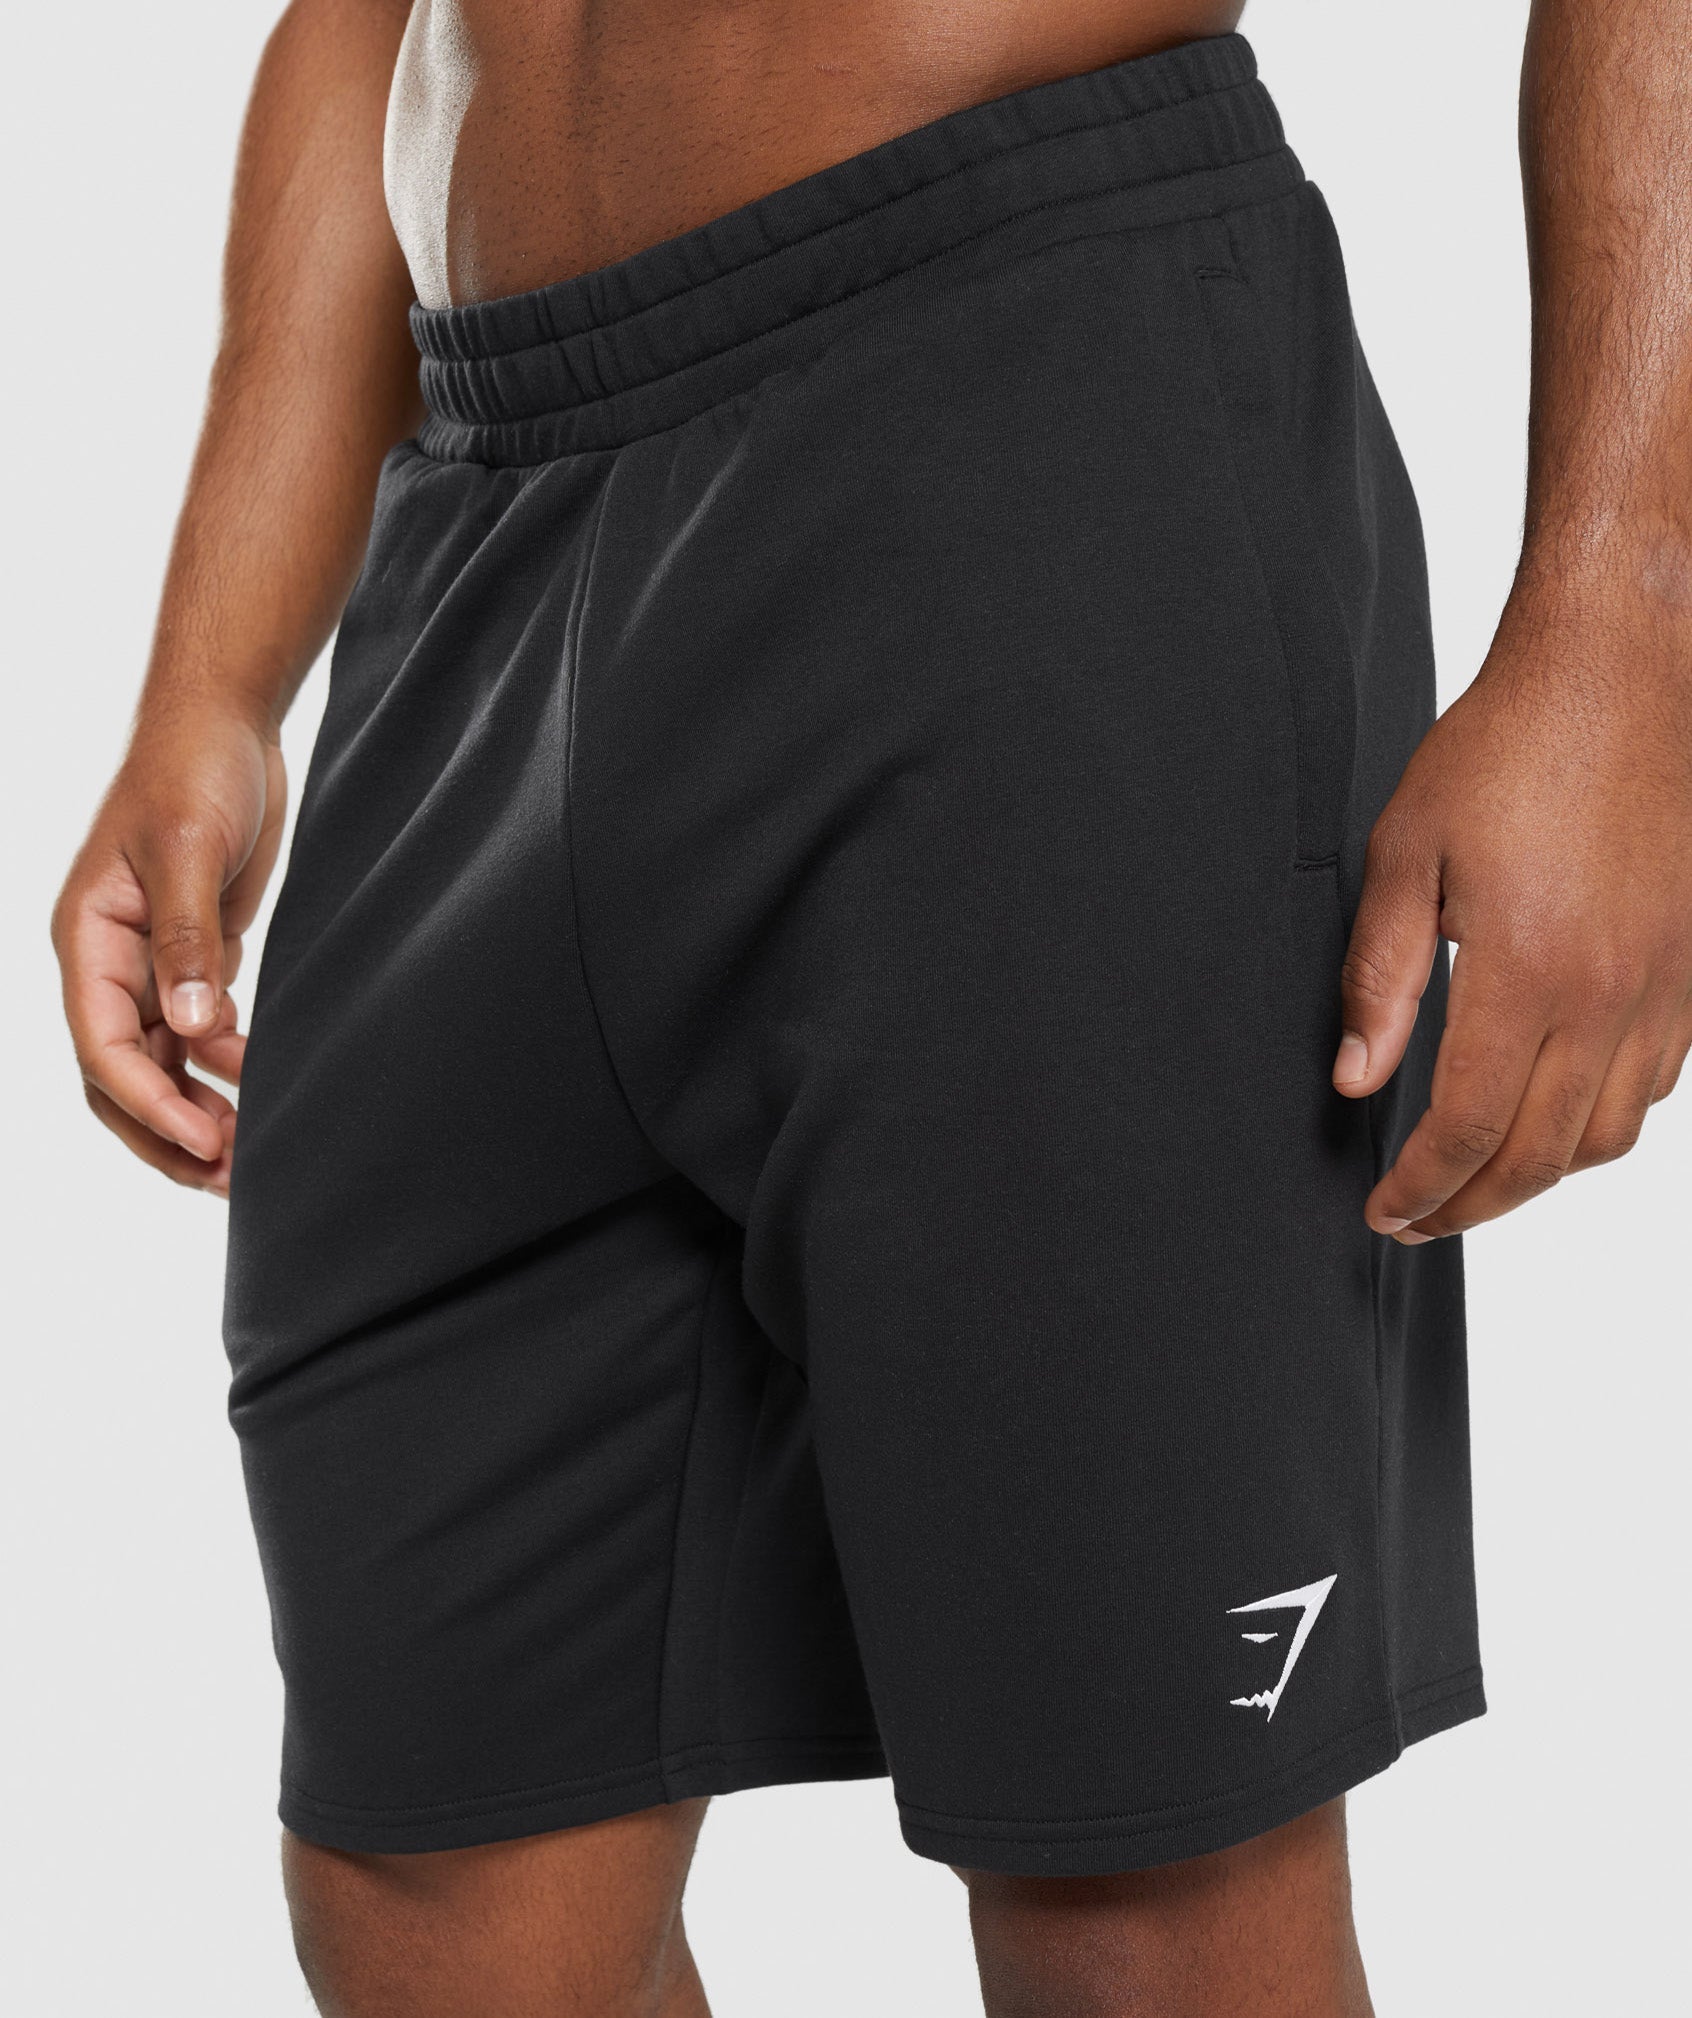 5'9 155 LBS 32 waist - medium Critical shorts and Critical T shirt : r/ Gymshark